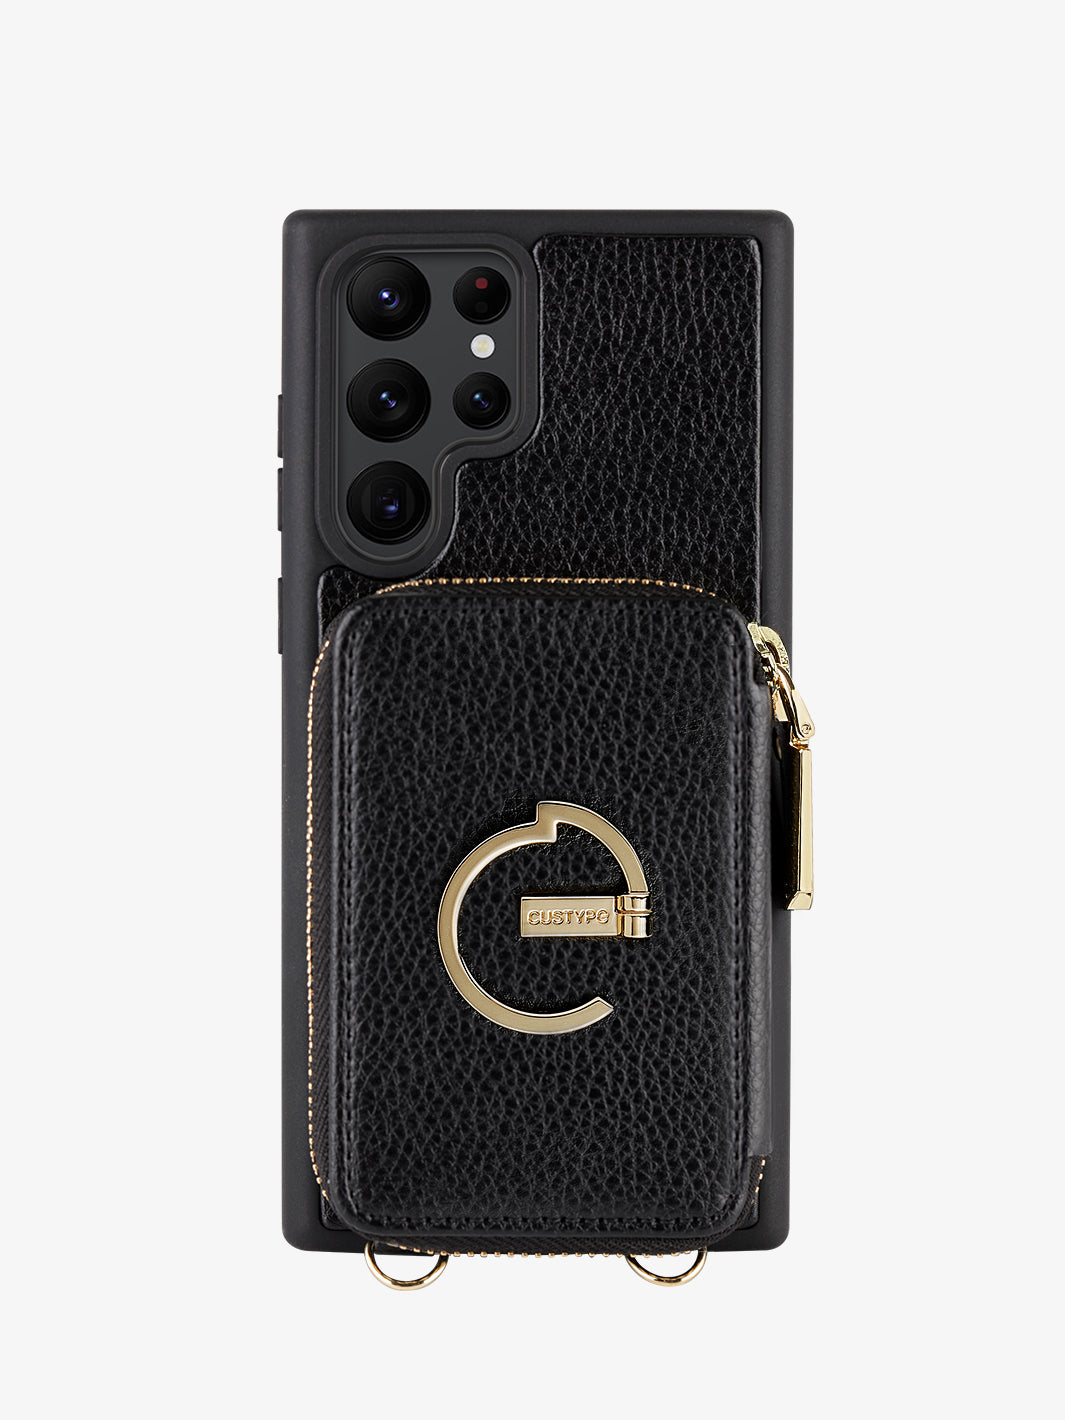 Samsung Galaxy phone case 23 ultra phone cover in black